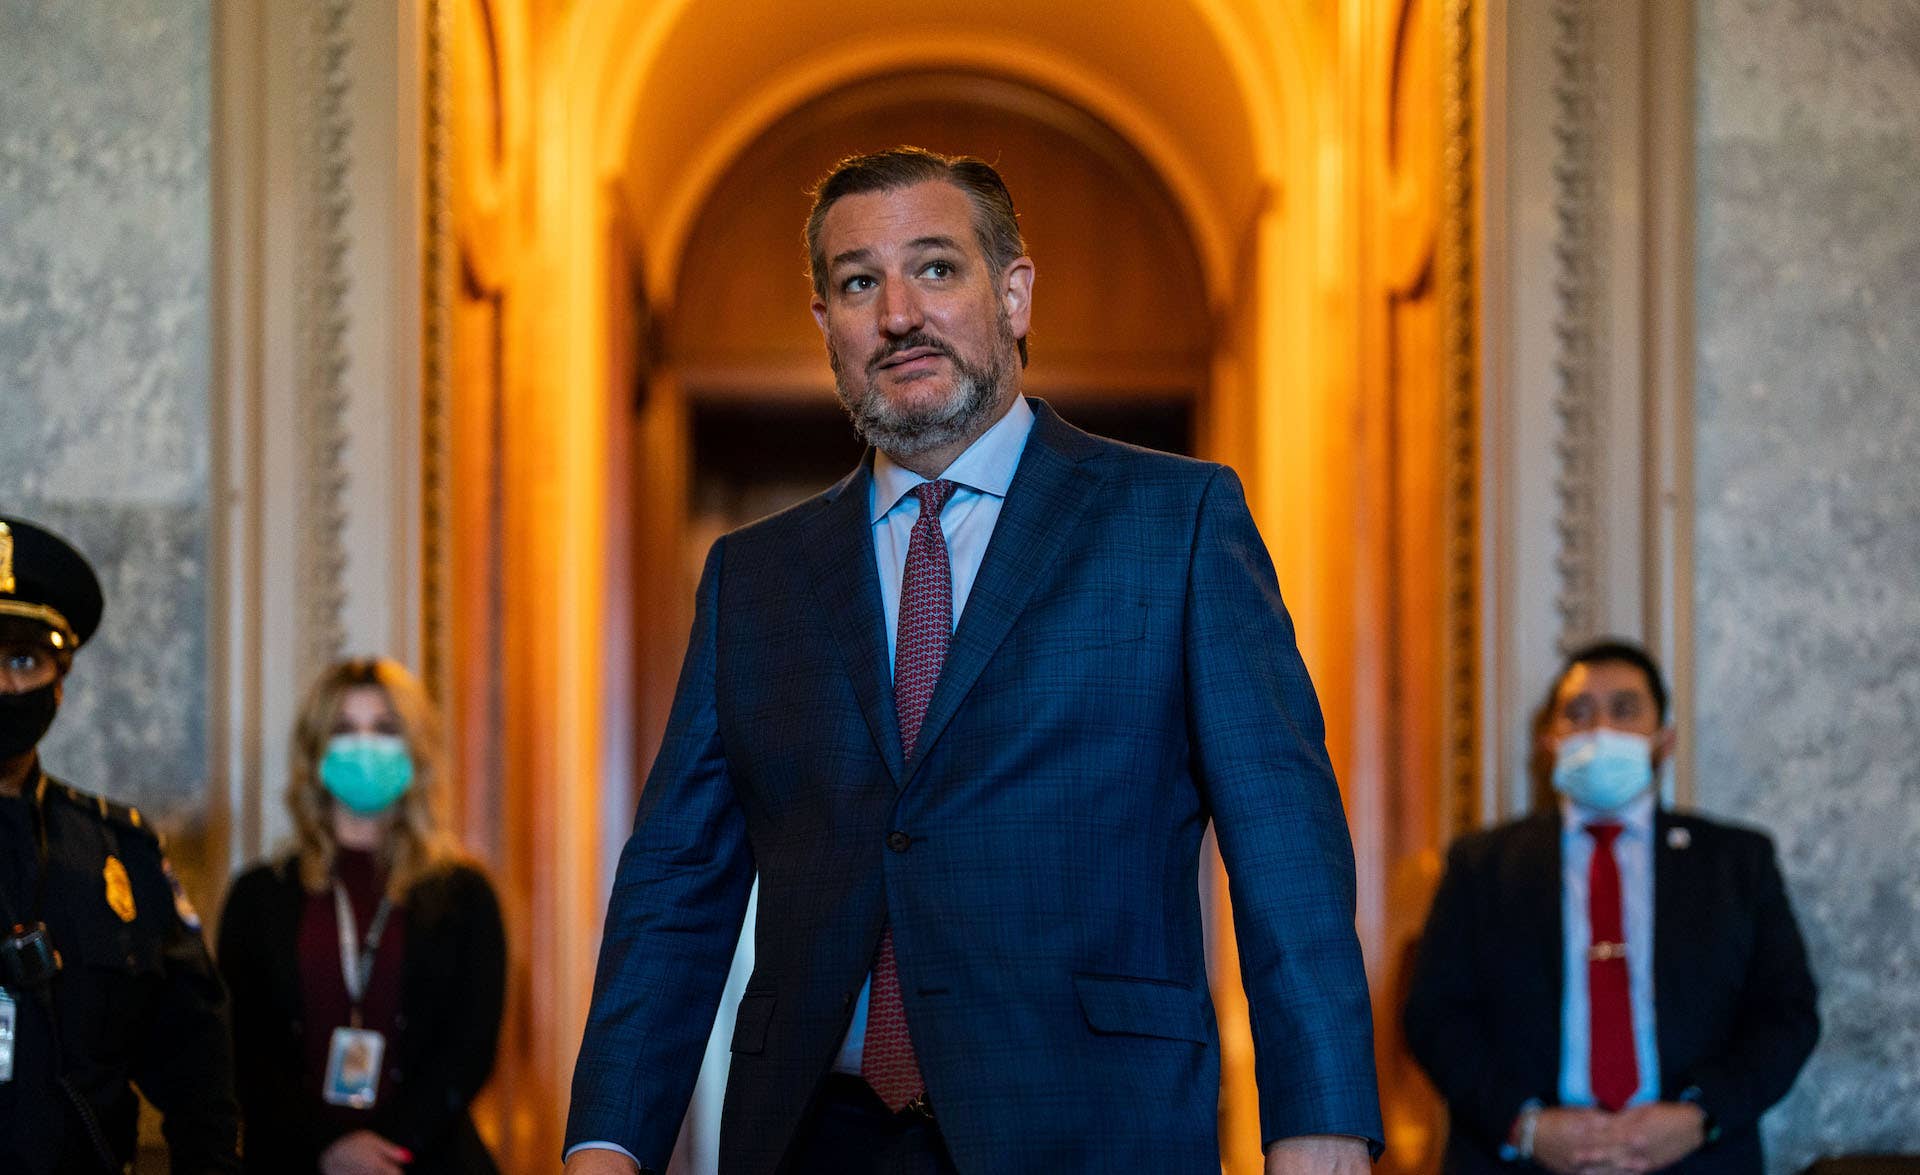 Ted Cruz at the Senate Chamber in Washington D.C.